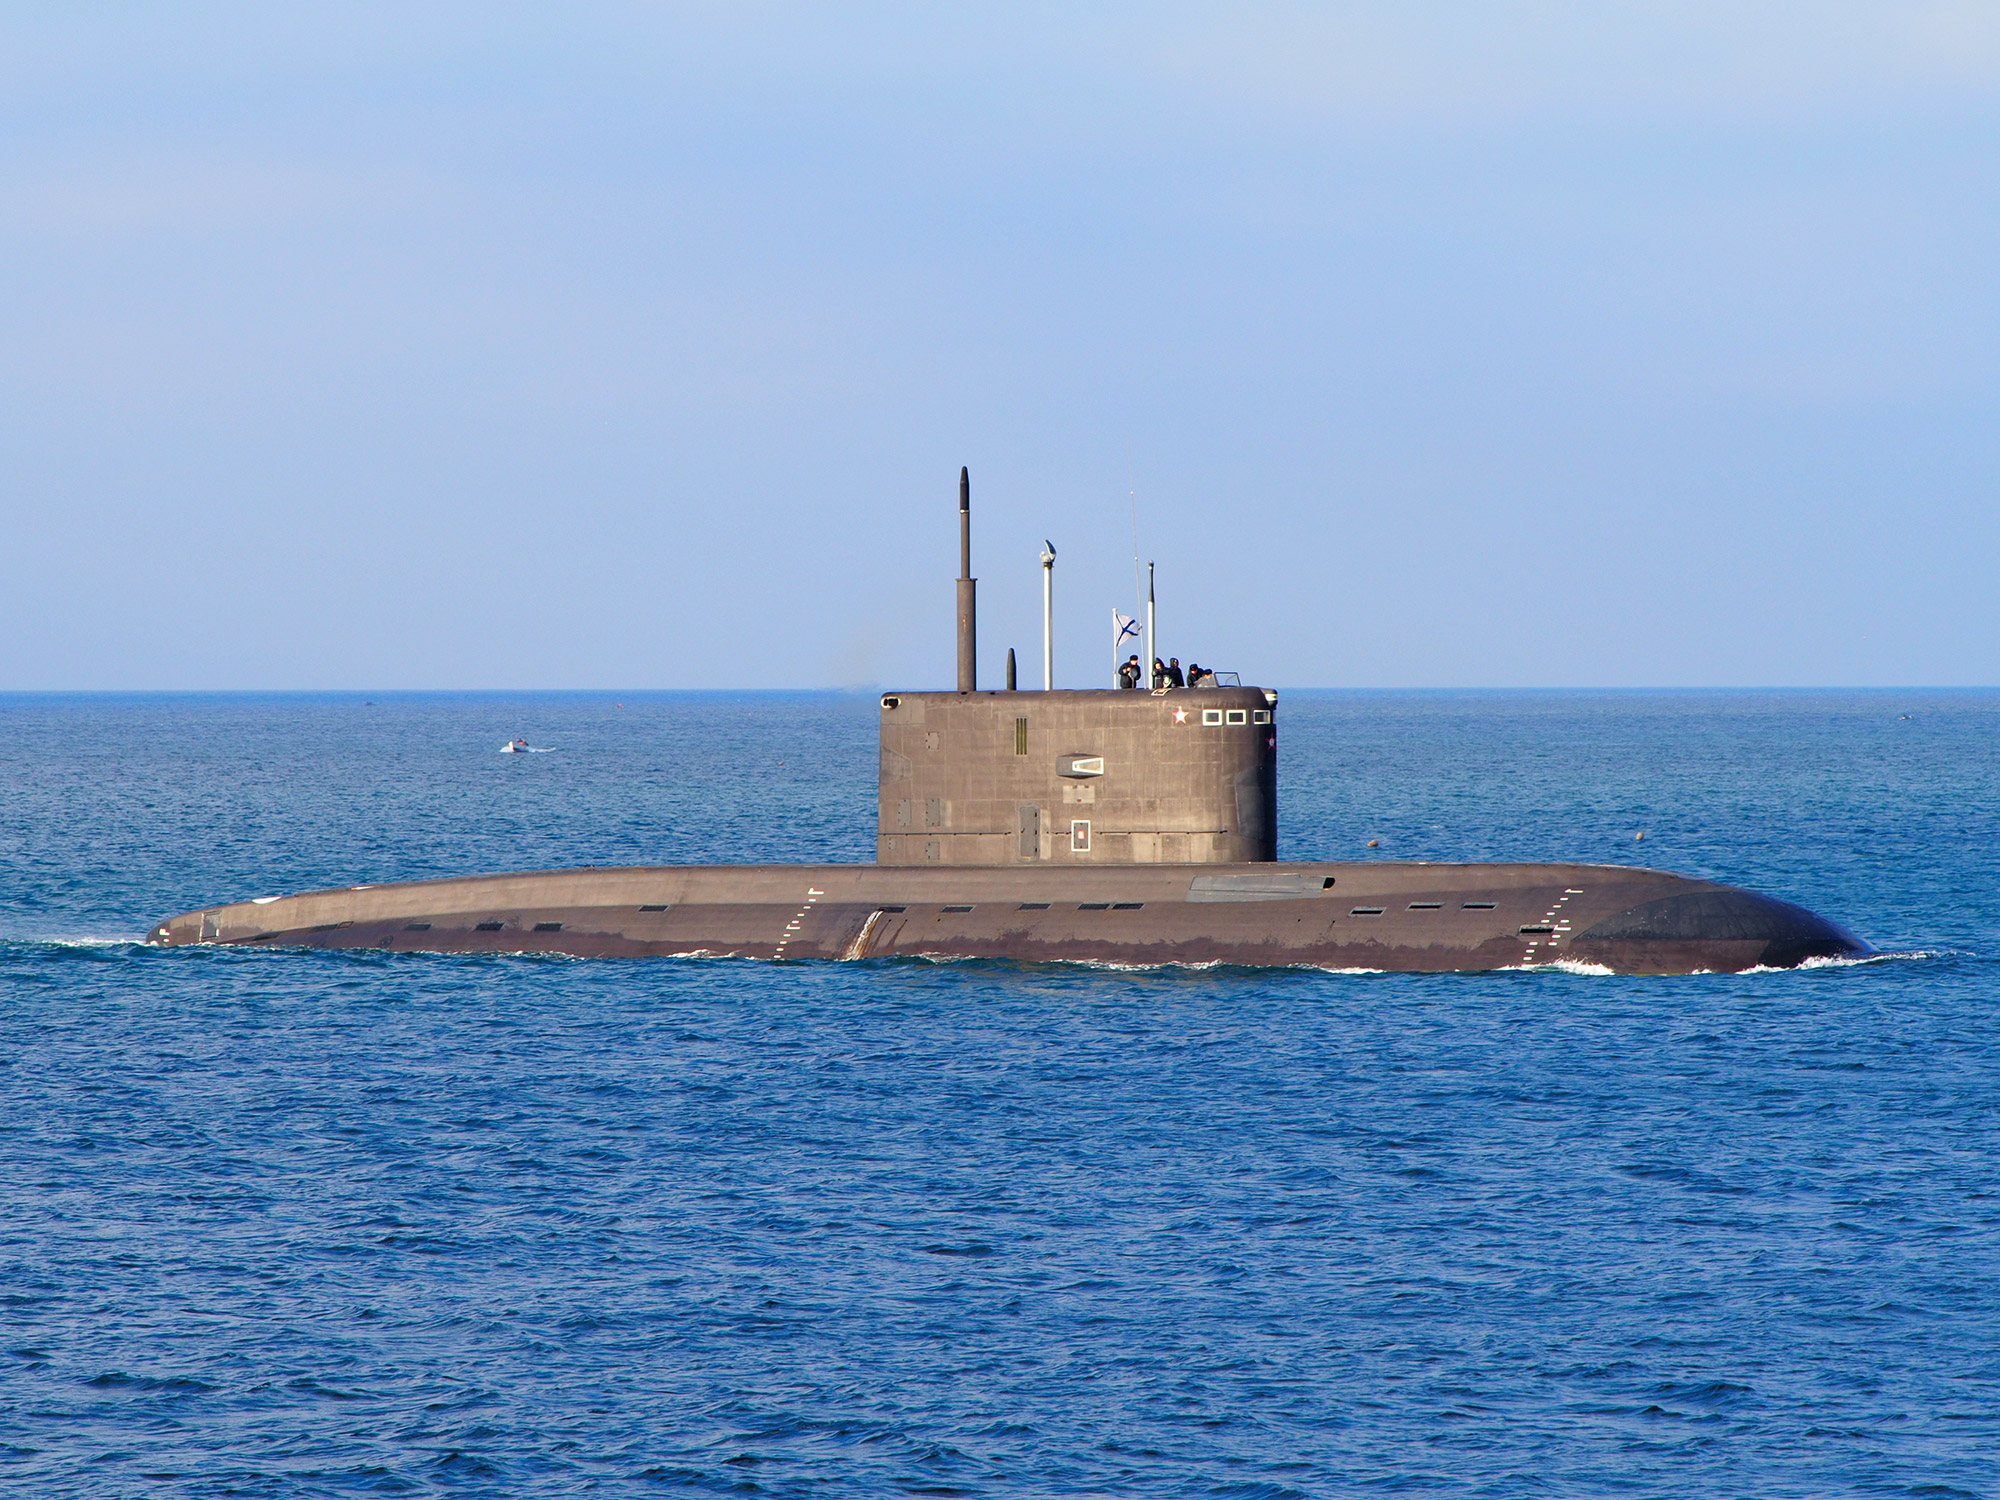 Лодки пл. Подводная лодка Колпино. Б-271 «Колпино». Экипаж подлодки Колпино. Черноморский флот подлодка Колпино.